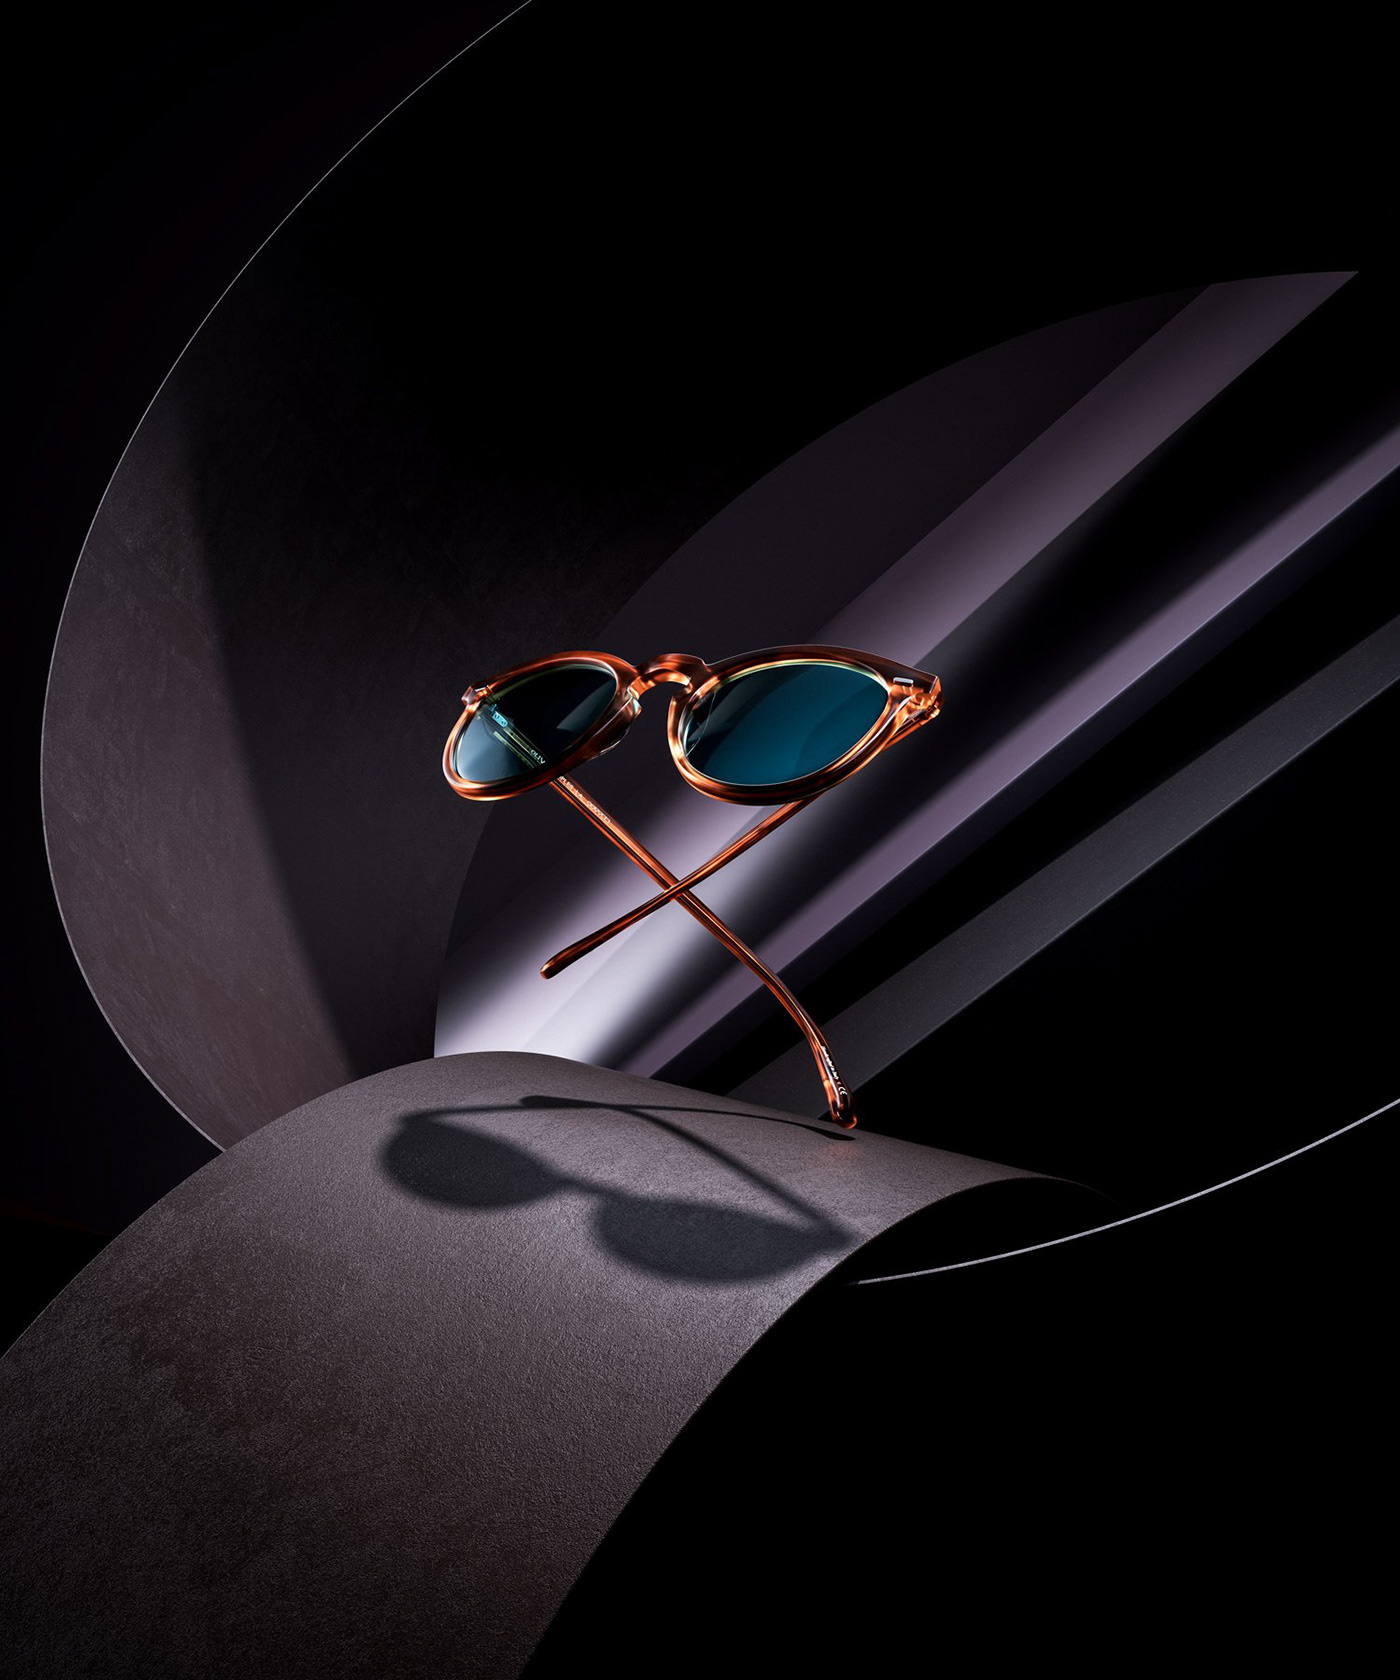 eyewear Sunglasses CGI 3D Render product Advertising  CG Oliver Peoples